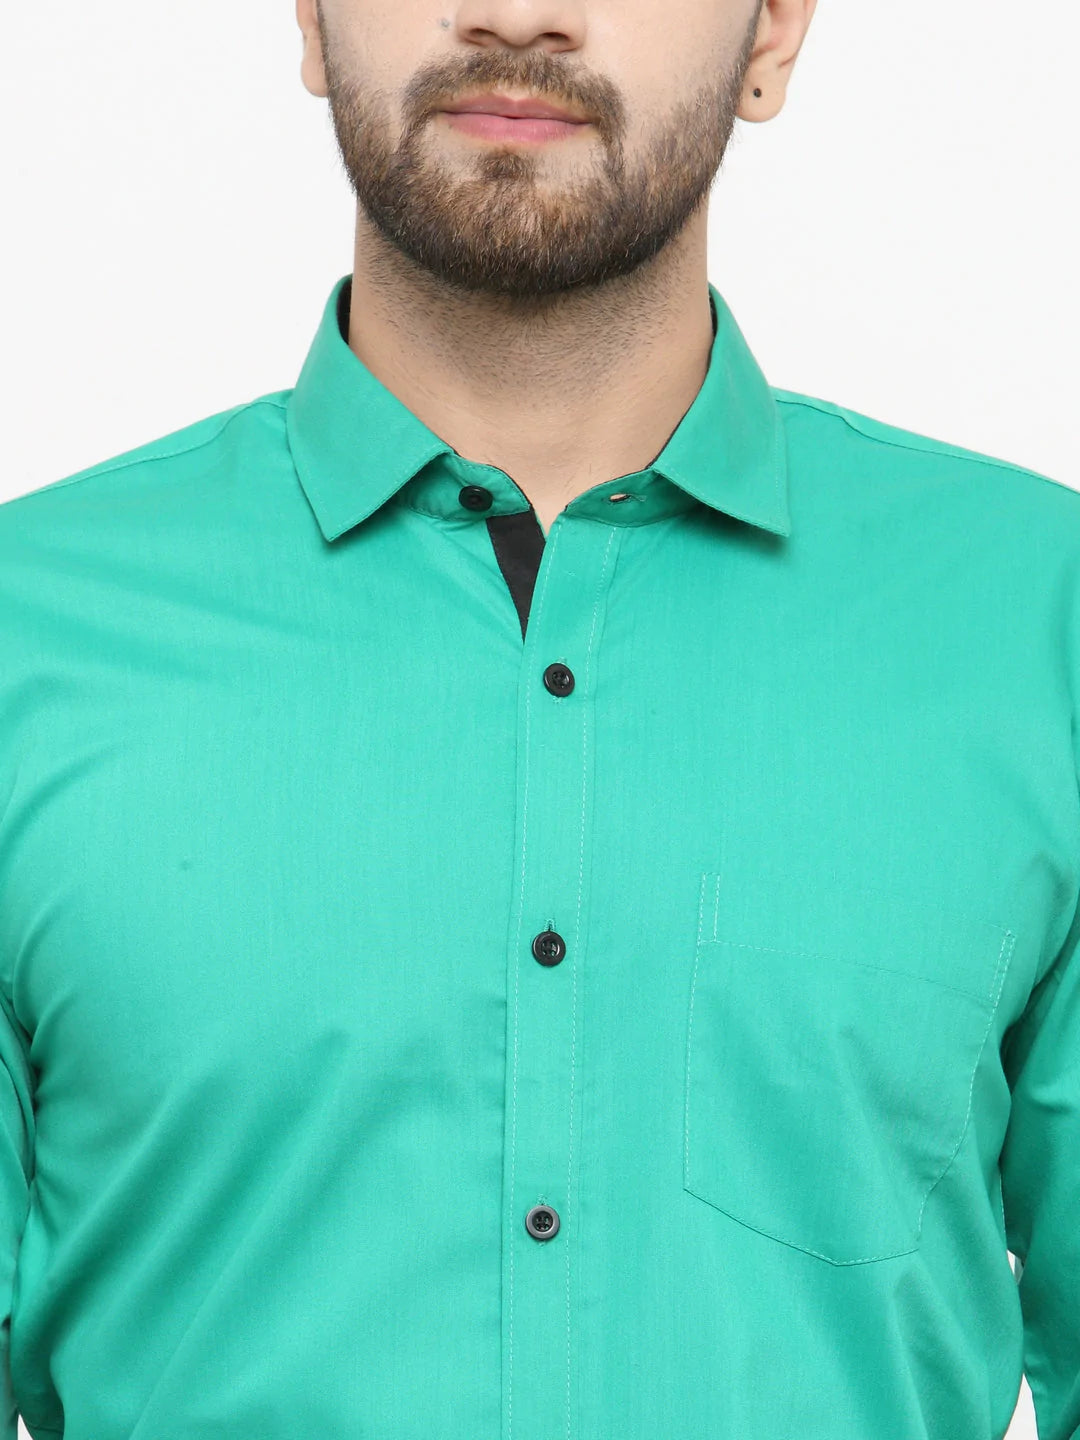 Jainish Green Formal Shirt with black detailing ( SF 411Green )